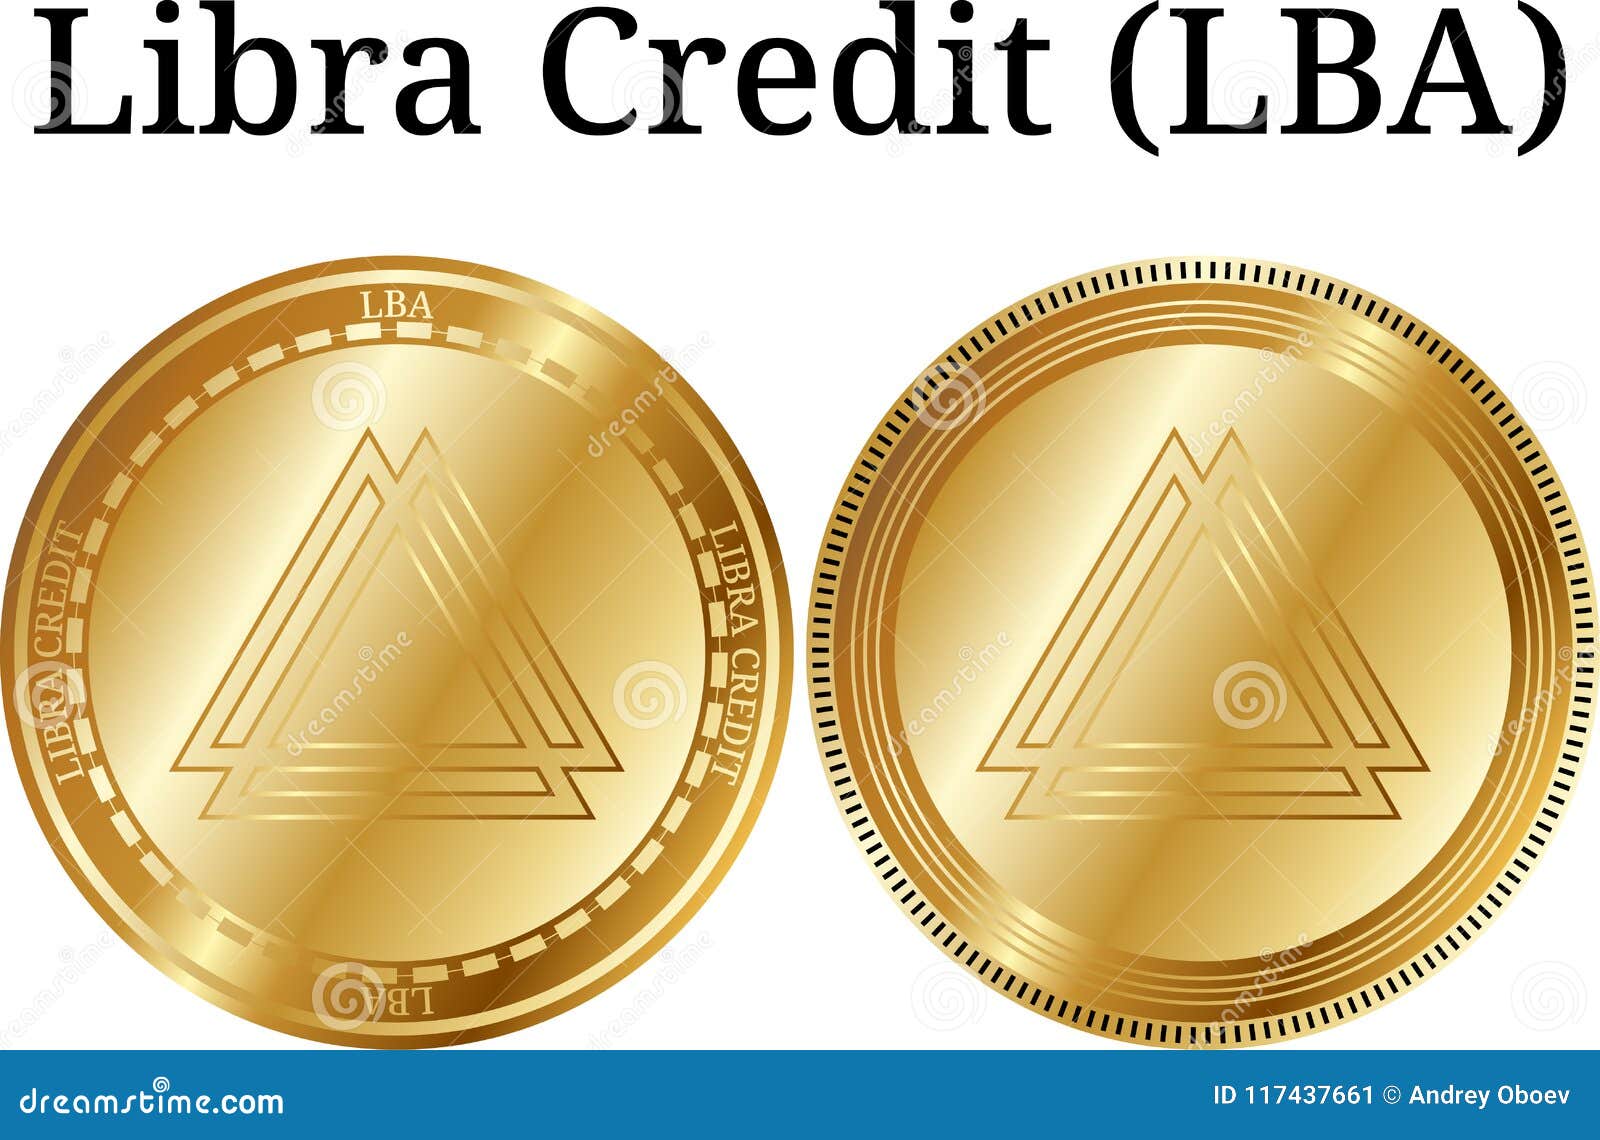 set of physical golden coin libra credit (lba)